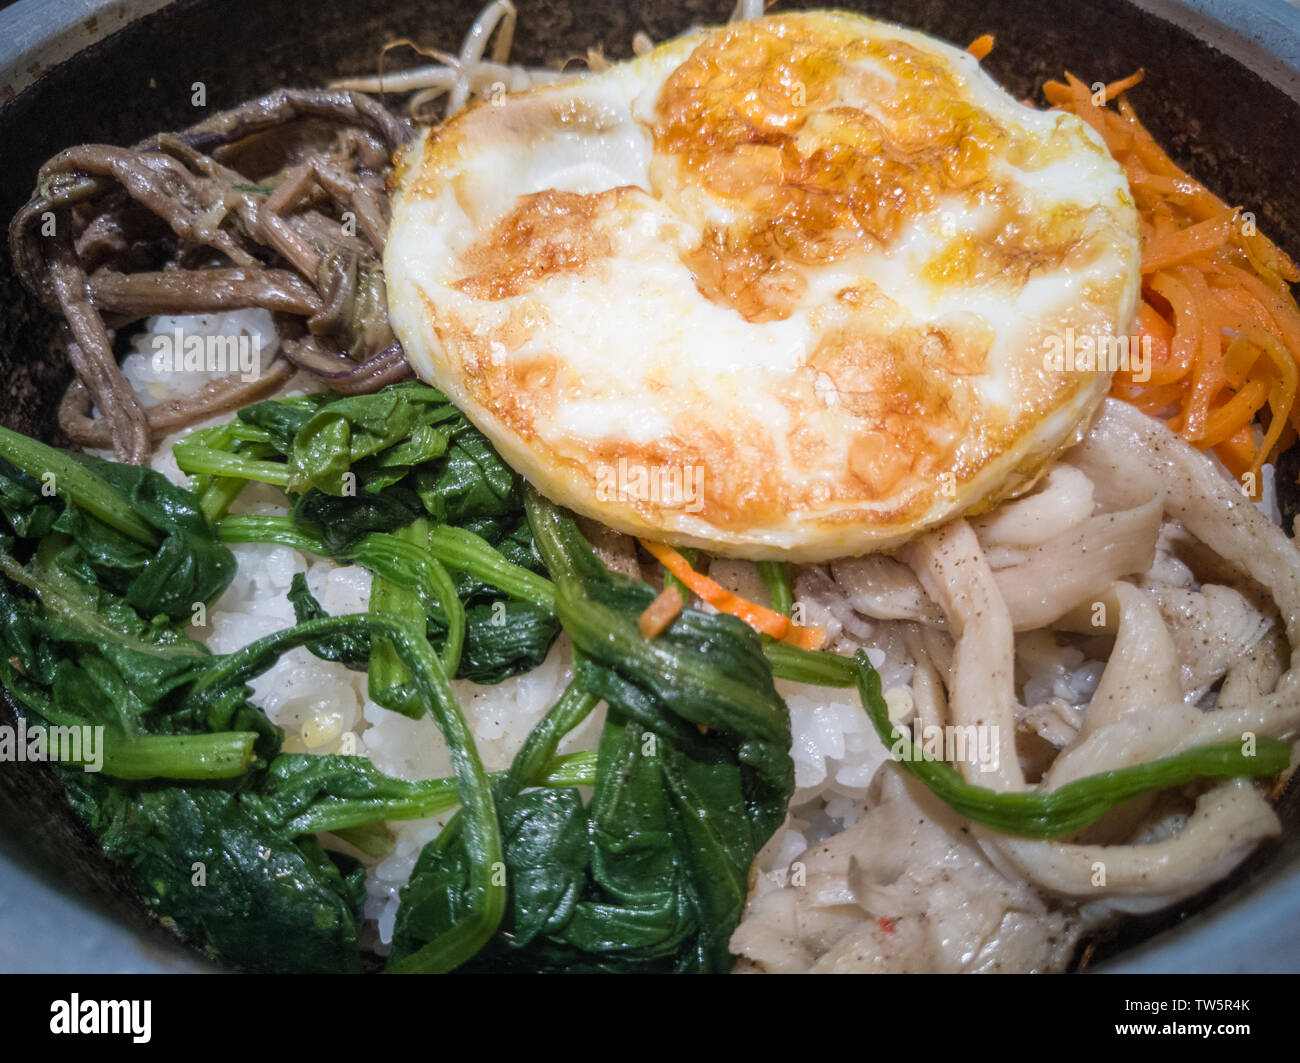 Yeongyang dolsotbap (hot stone pot rice dish)